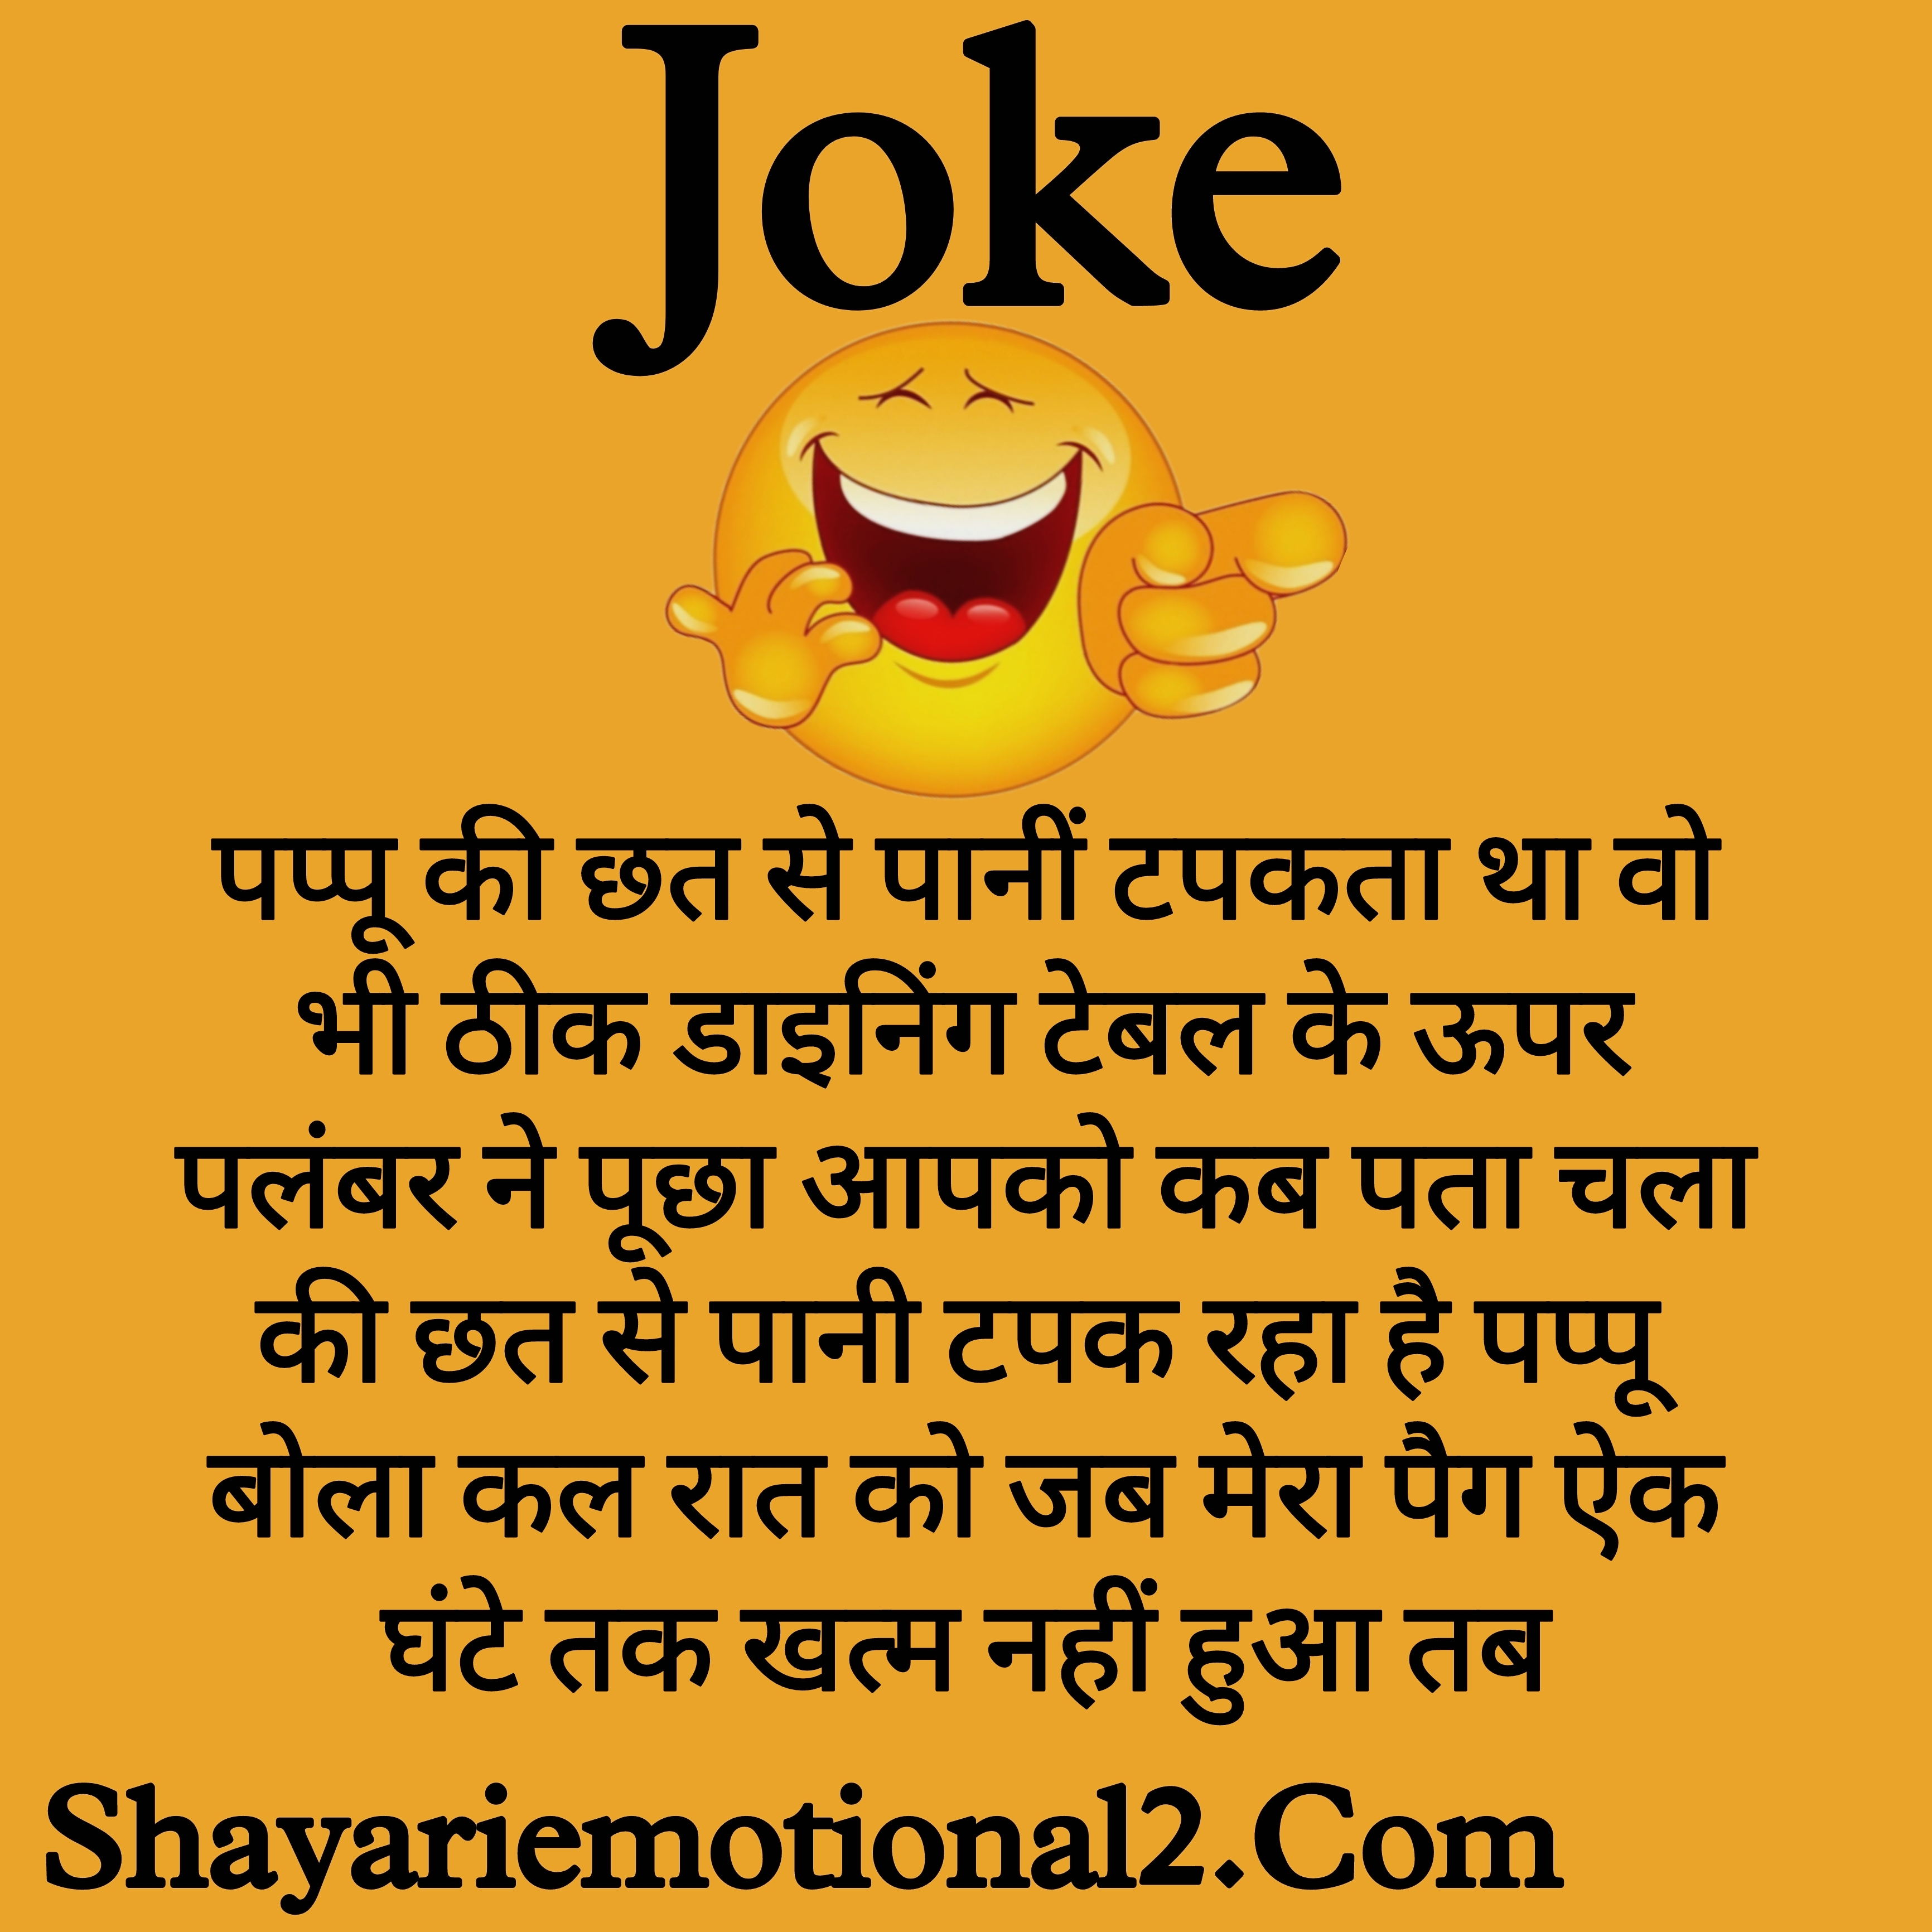 Full comedy jokes in hindi